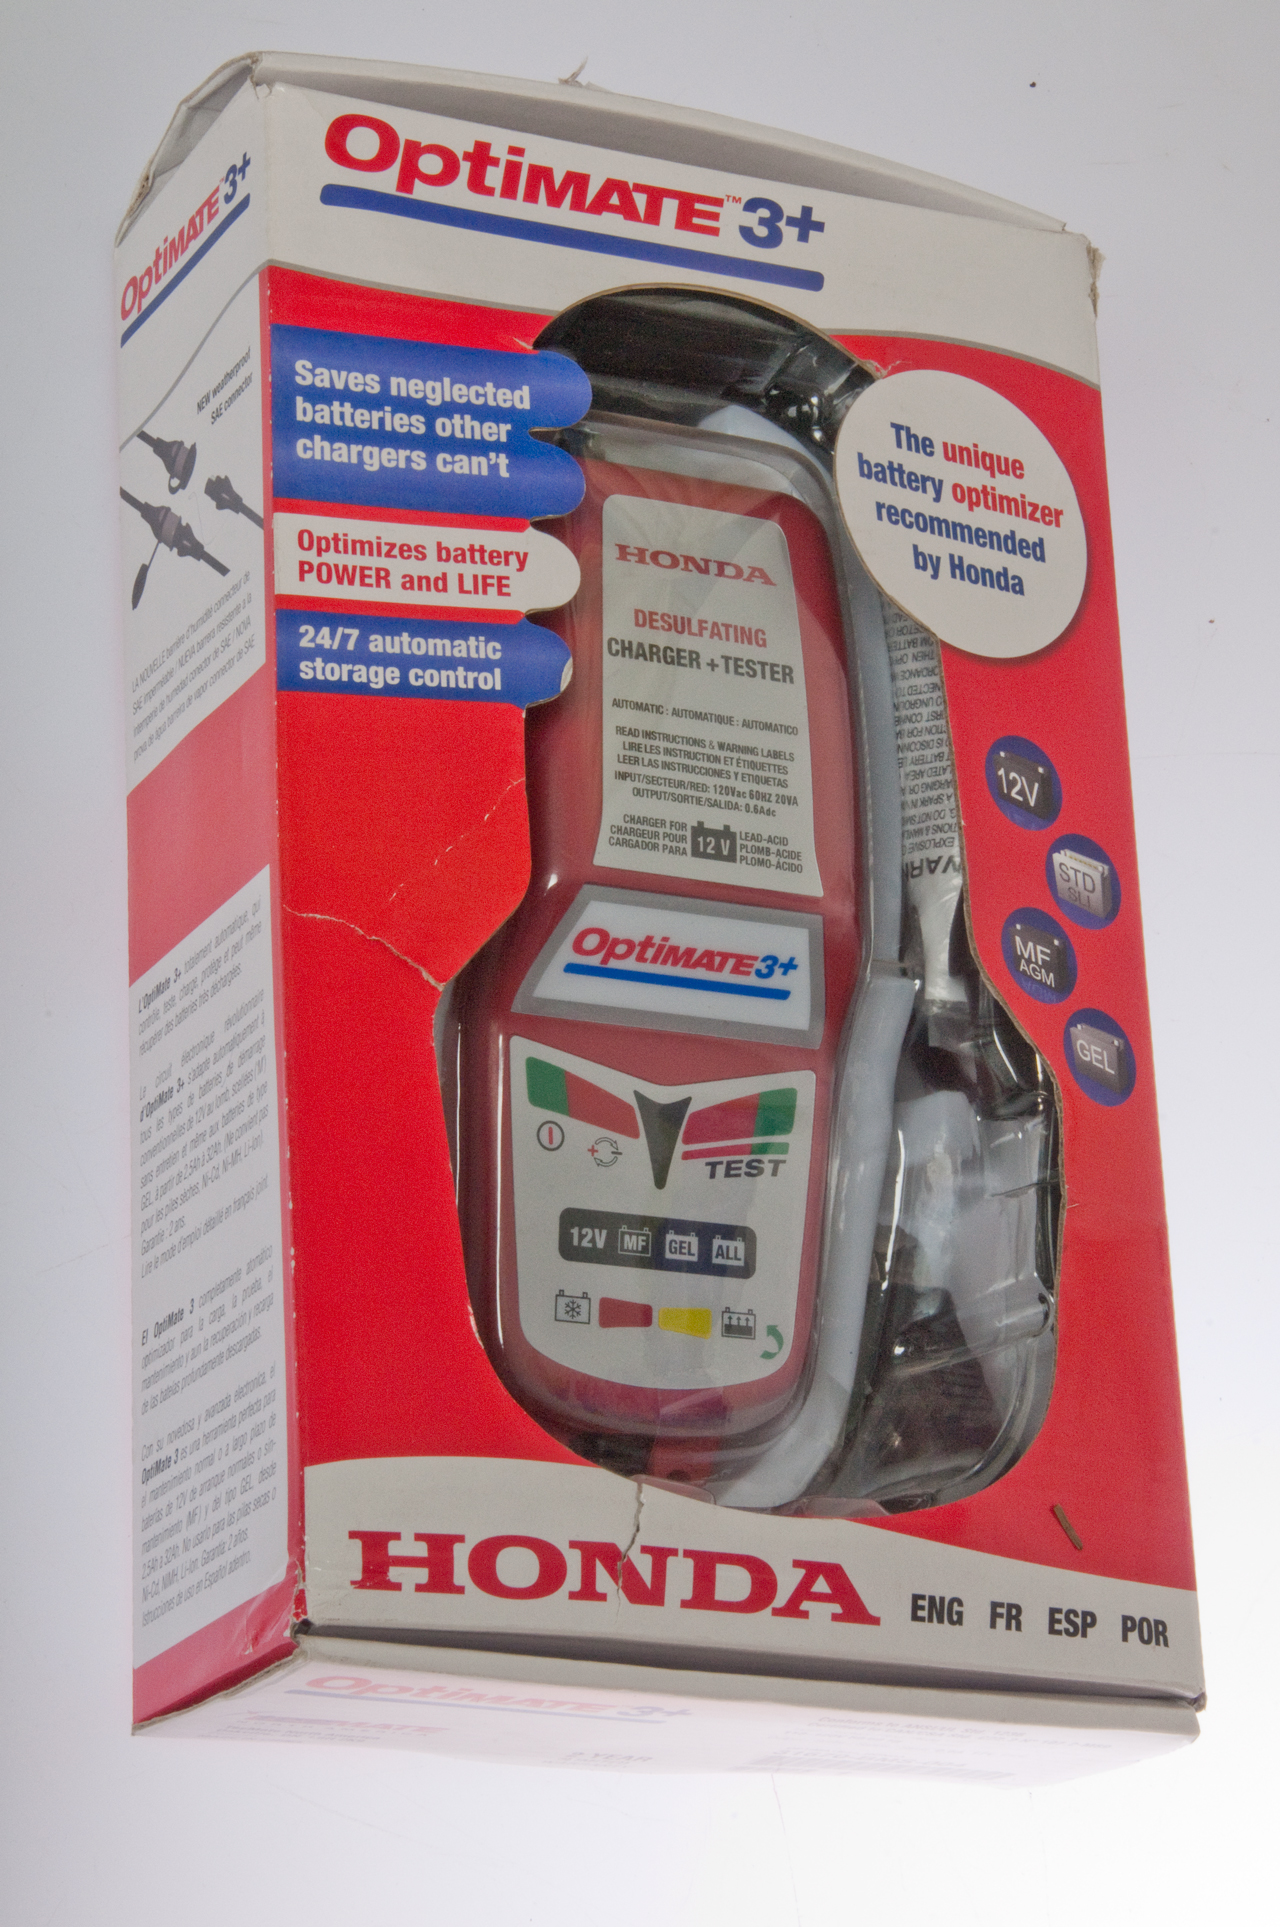 Honda optimate 3 charger #1